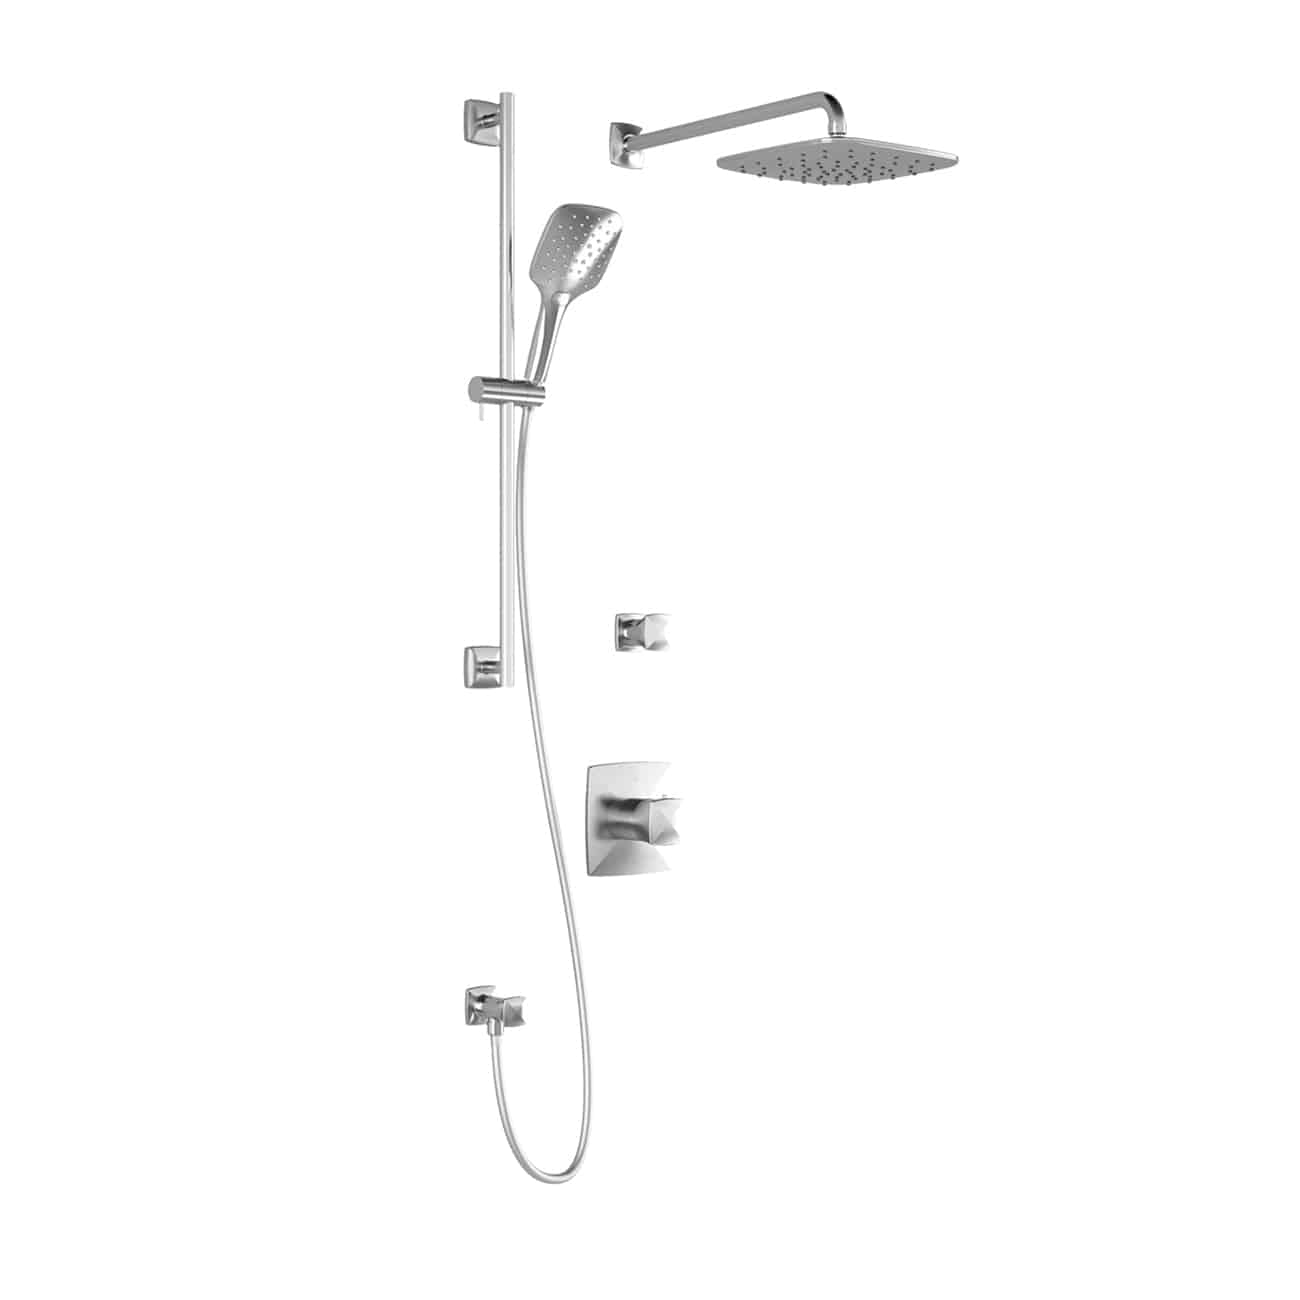 Kalia UMANI T2 PLUS (Valves Not Included) AQUATONIK T/P Shower System with Wall Arm and 9" Square Rain Shower Head- Chrome